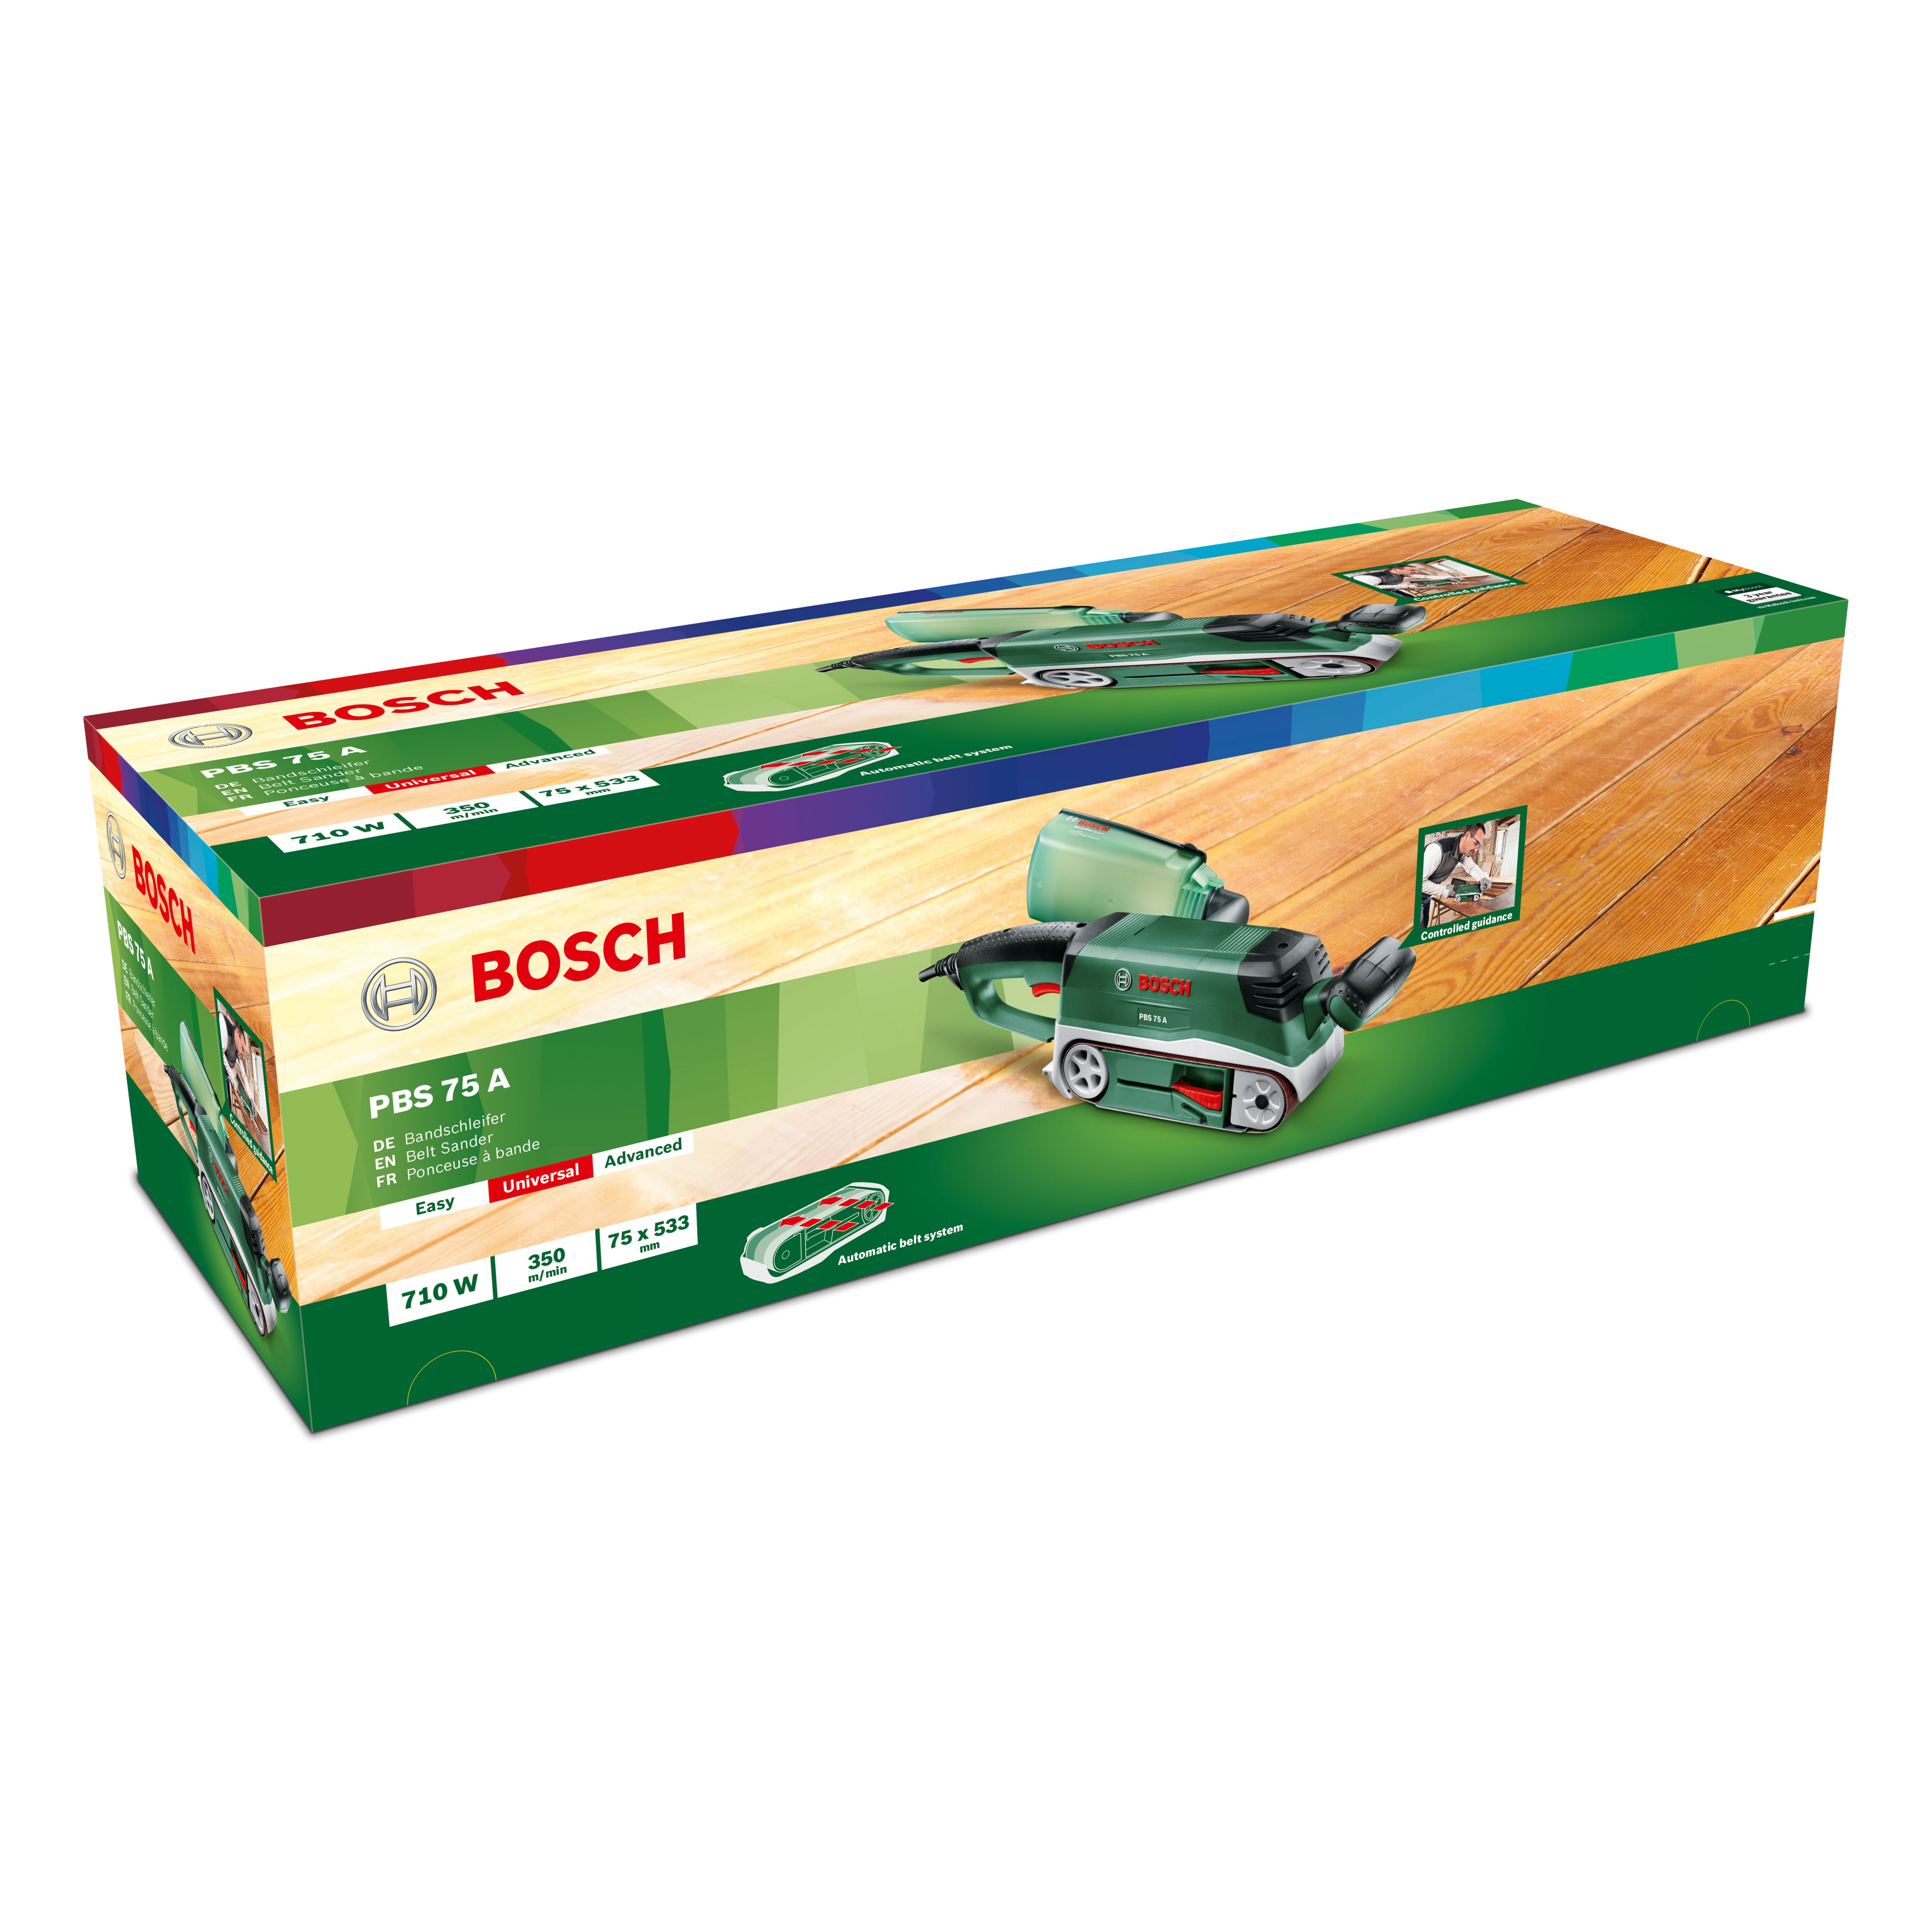 Bosch 710W 230V Corded Belt sander PBS 75 A